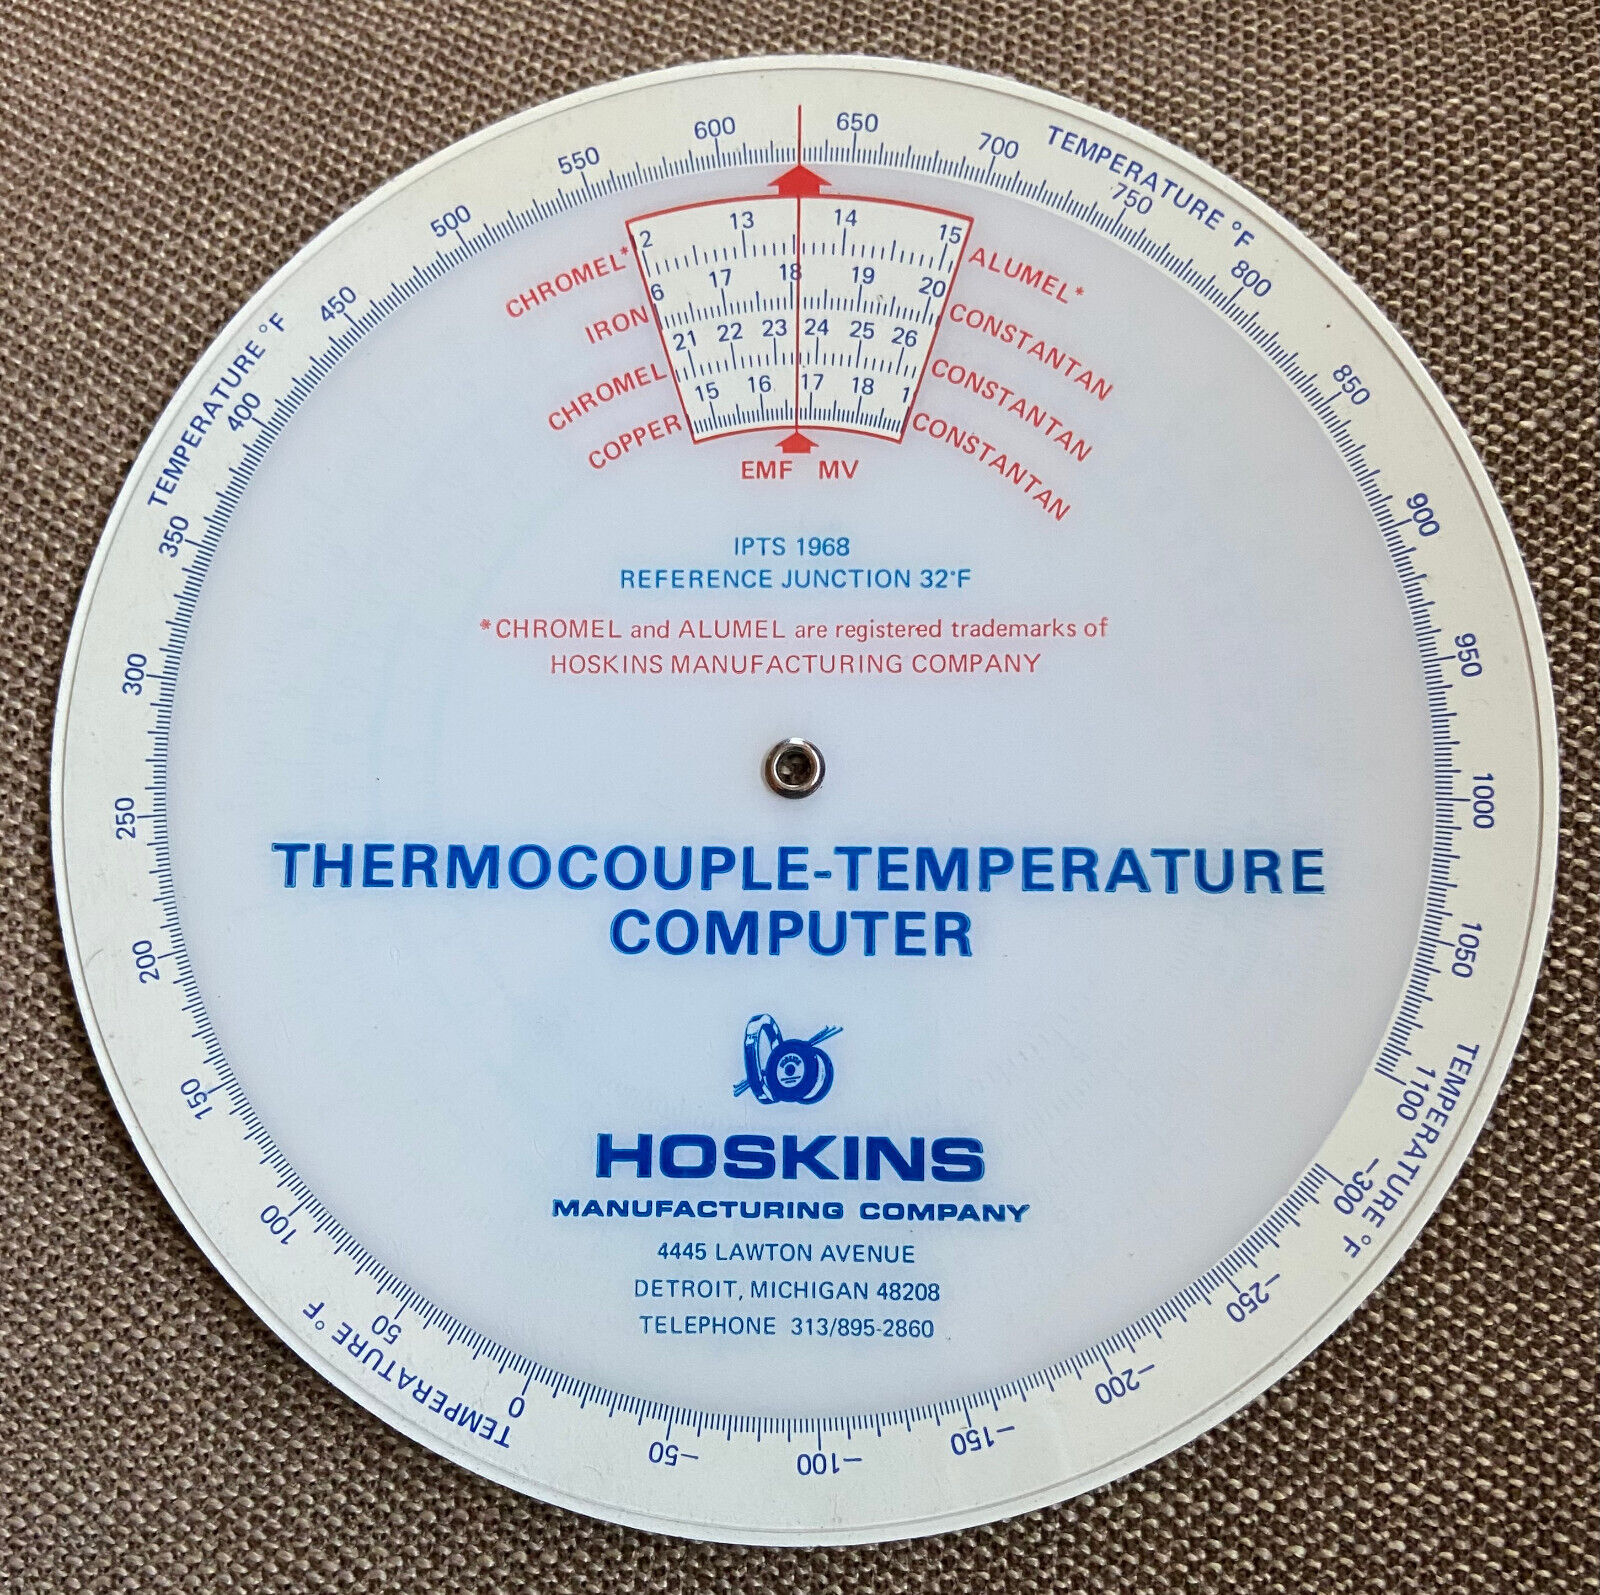 Hoskins Thermocouple-Temperature Computer - Circular Slide Rule - Chromel Alumel